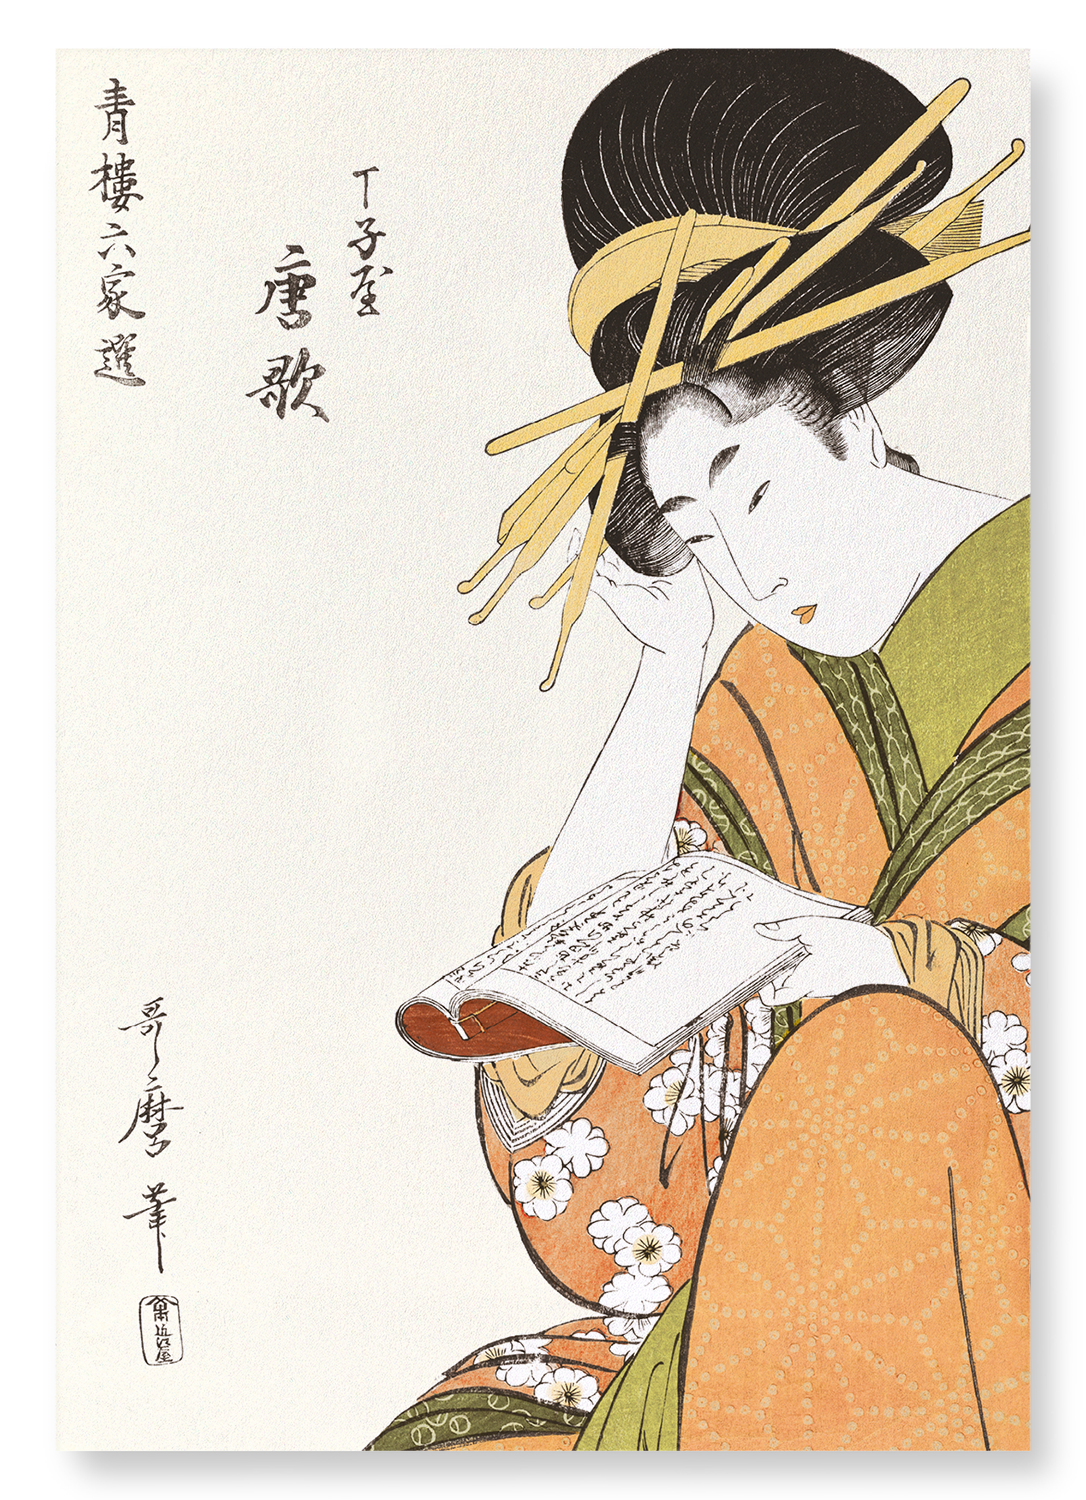 COURTESAN KARAUTA READING A BOOK: Japanese Art Print